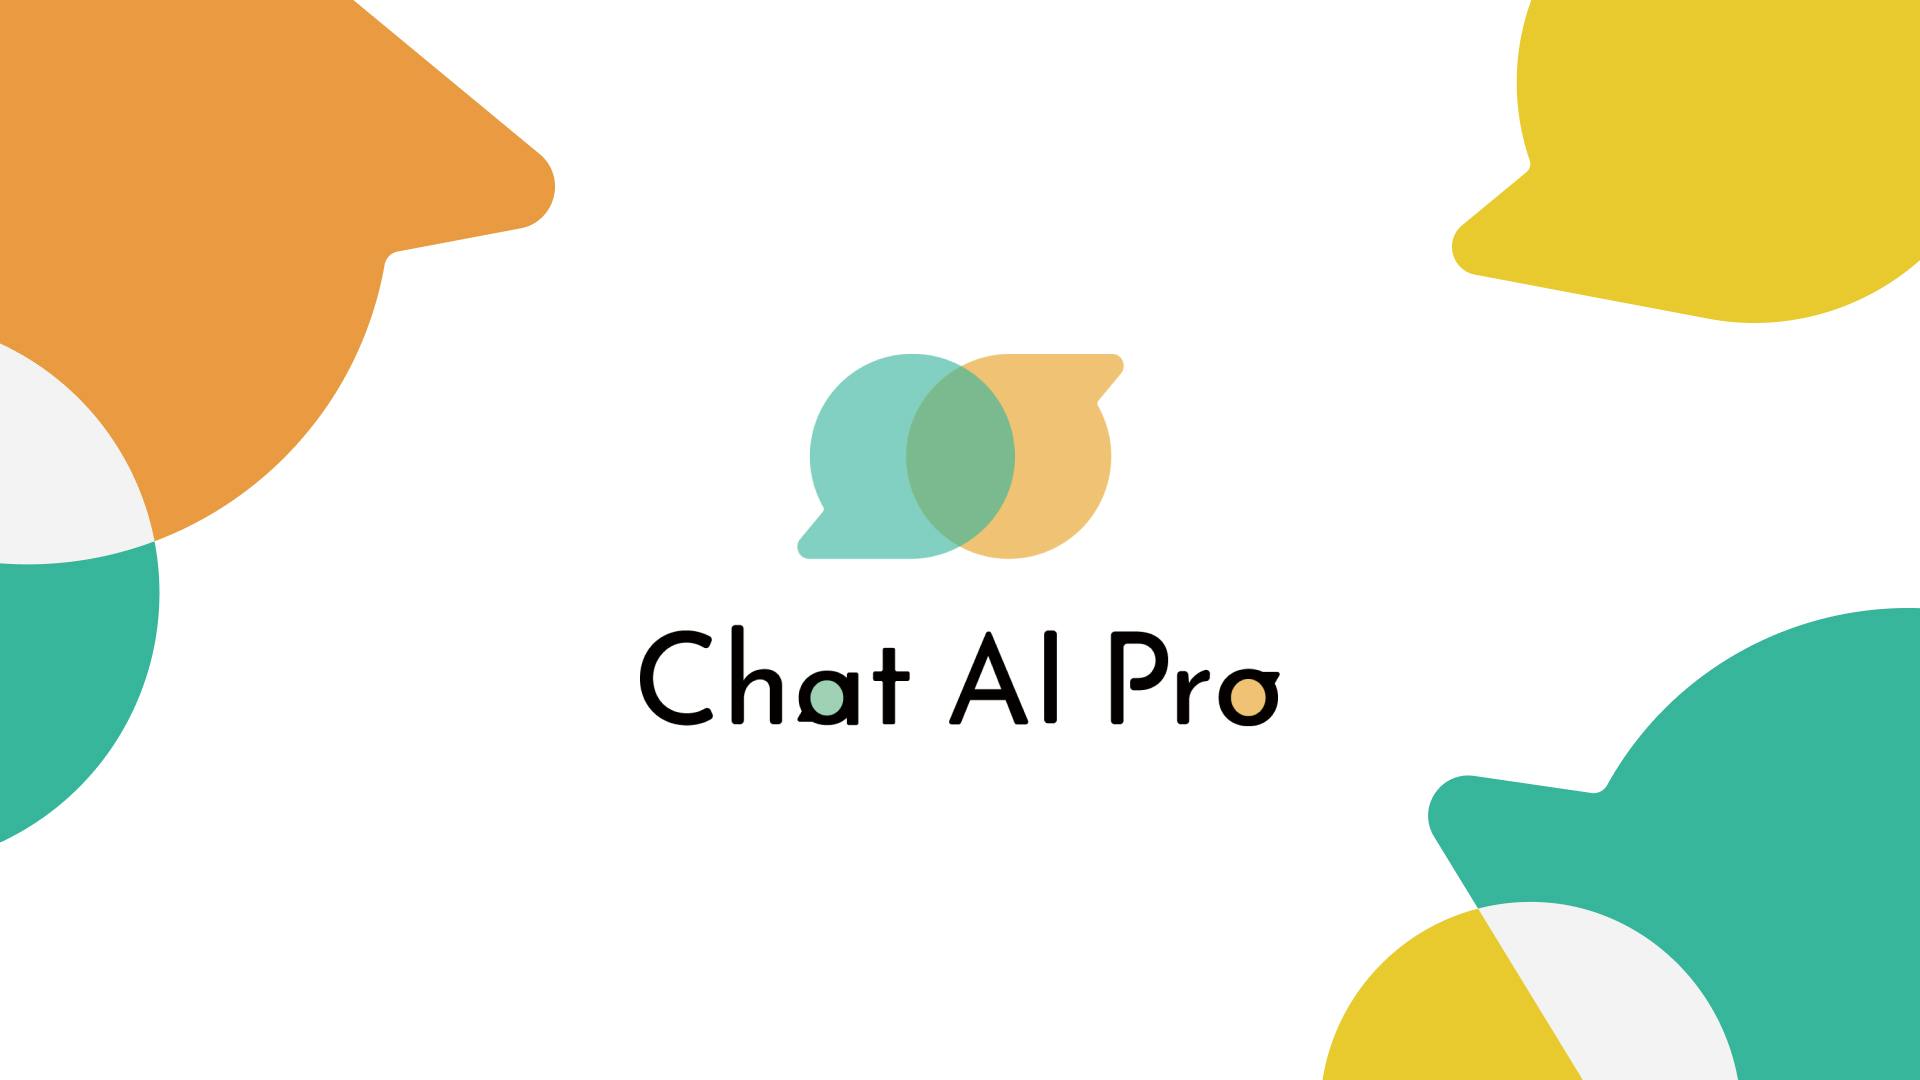 【Chat AI Pro】サービス説明資料